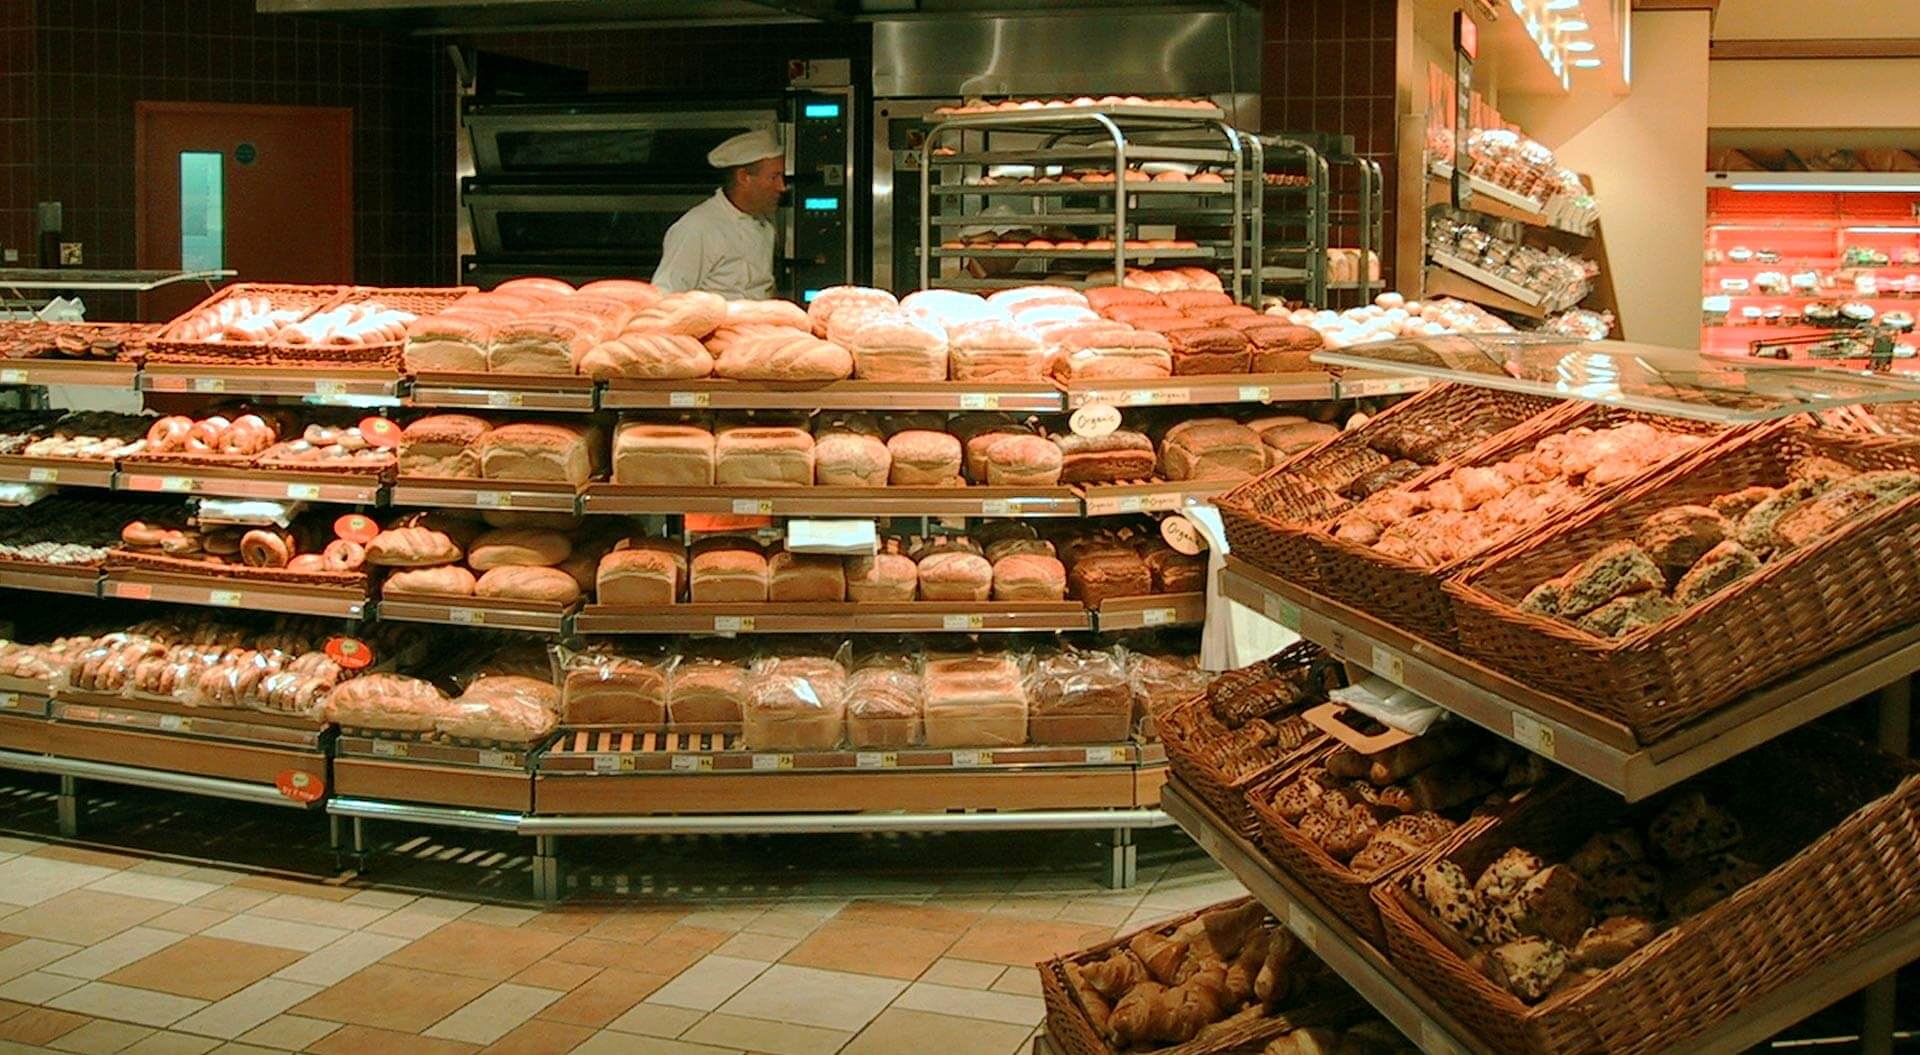 Safeway supermarket interior store design, merchandising display systems for bakery department